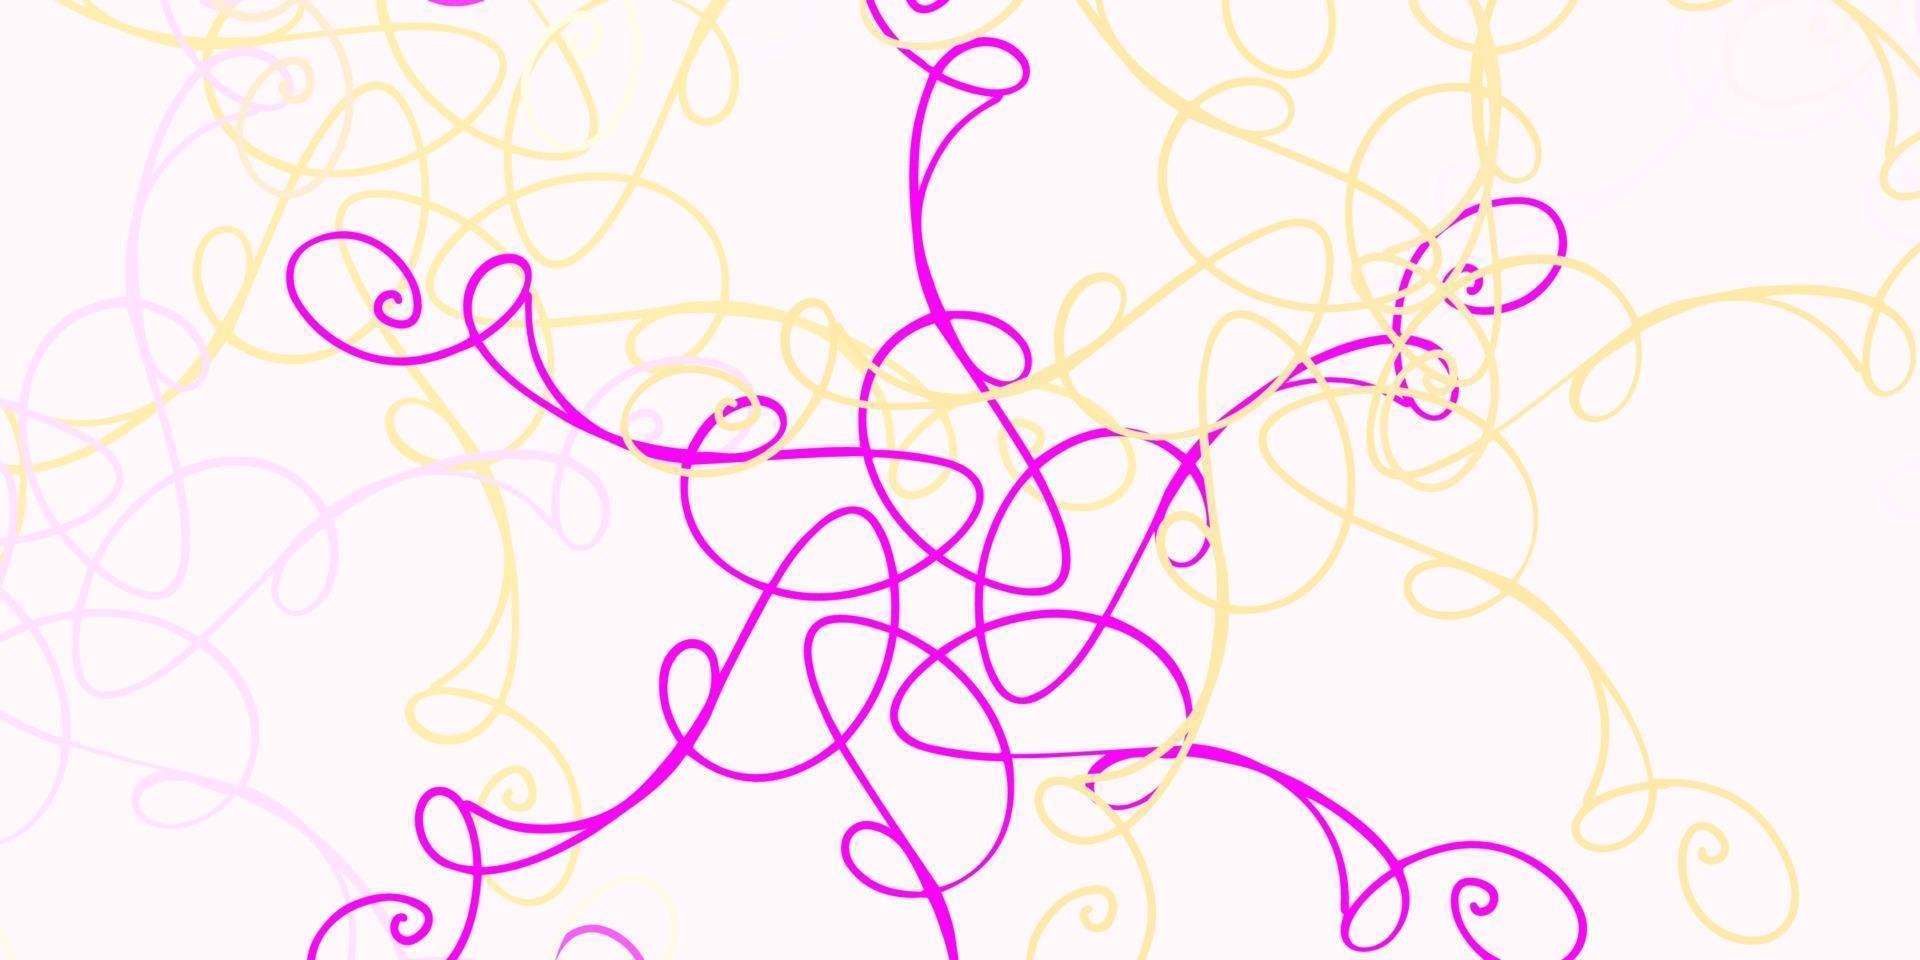 Fondo de vector rosa claro, amarillo con líneas torcidas.